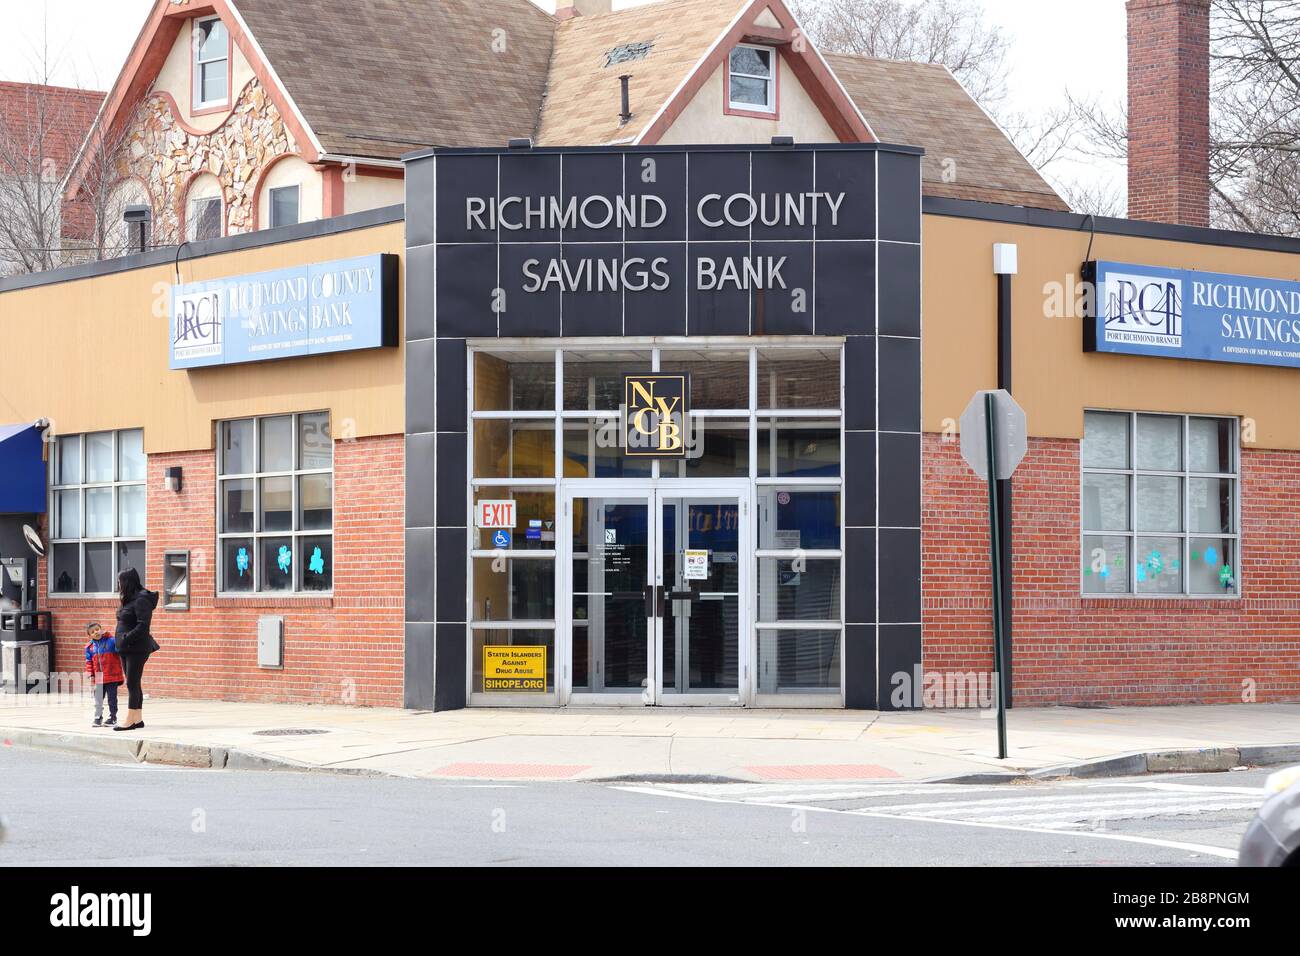 Richmond County Savings Bank, 282 Port Richmond Ave, Staten Island, New York. NYC storefront photo of a community bank in Port Richmond. Stock Photo